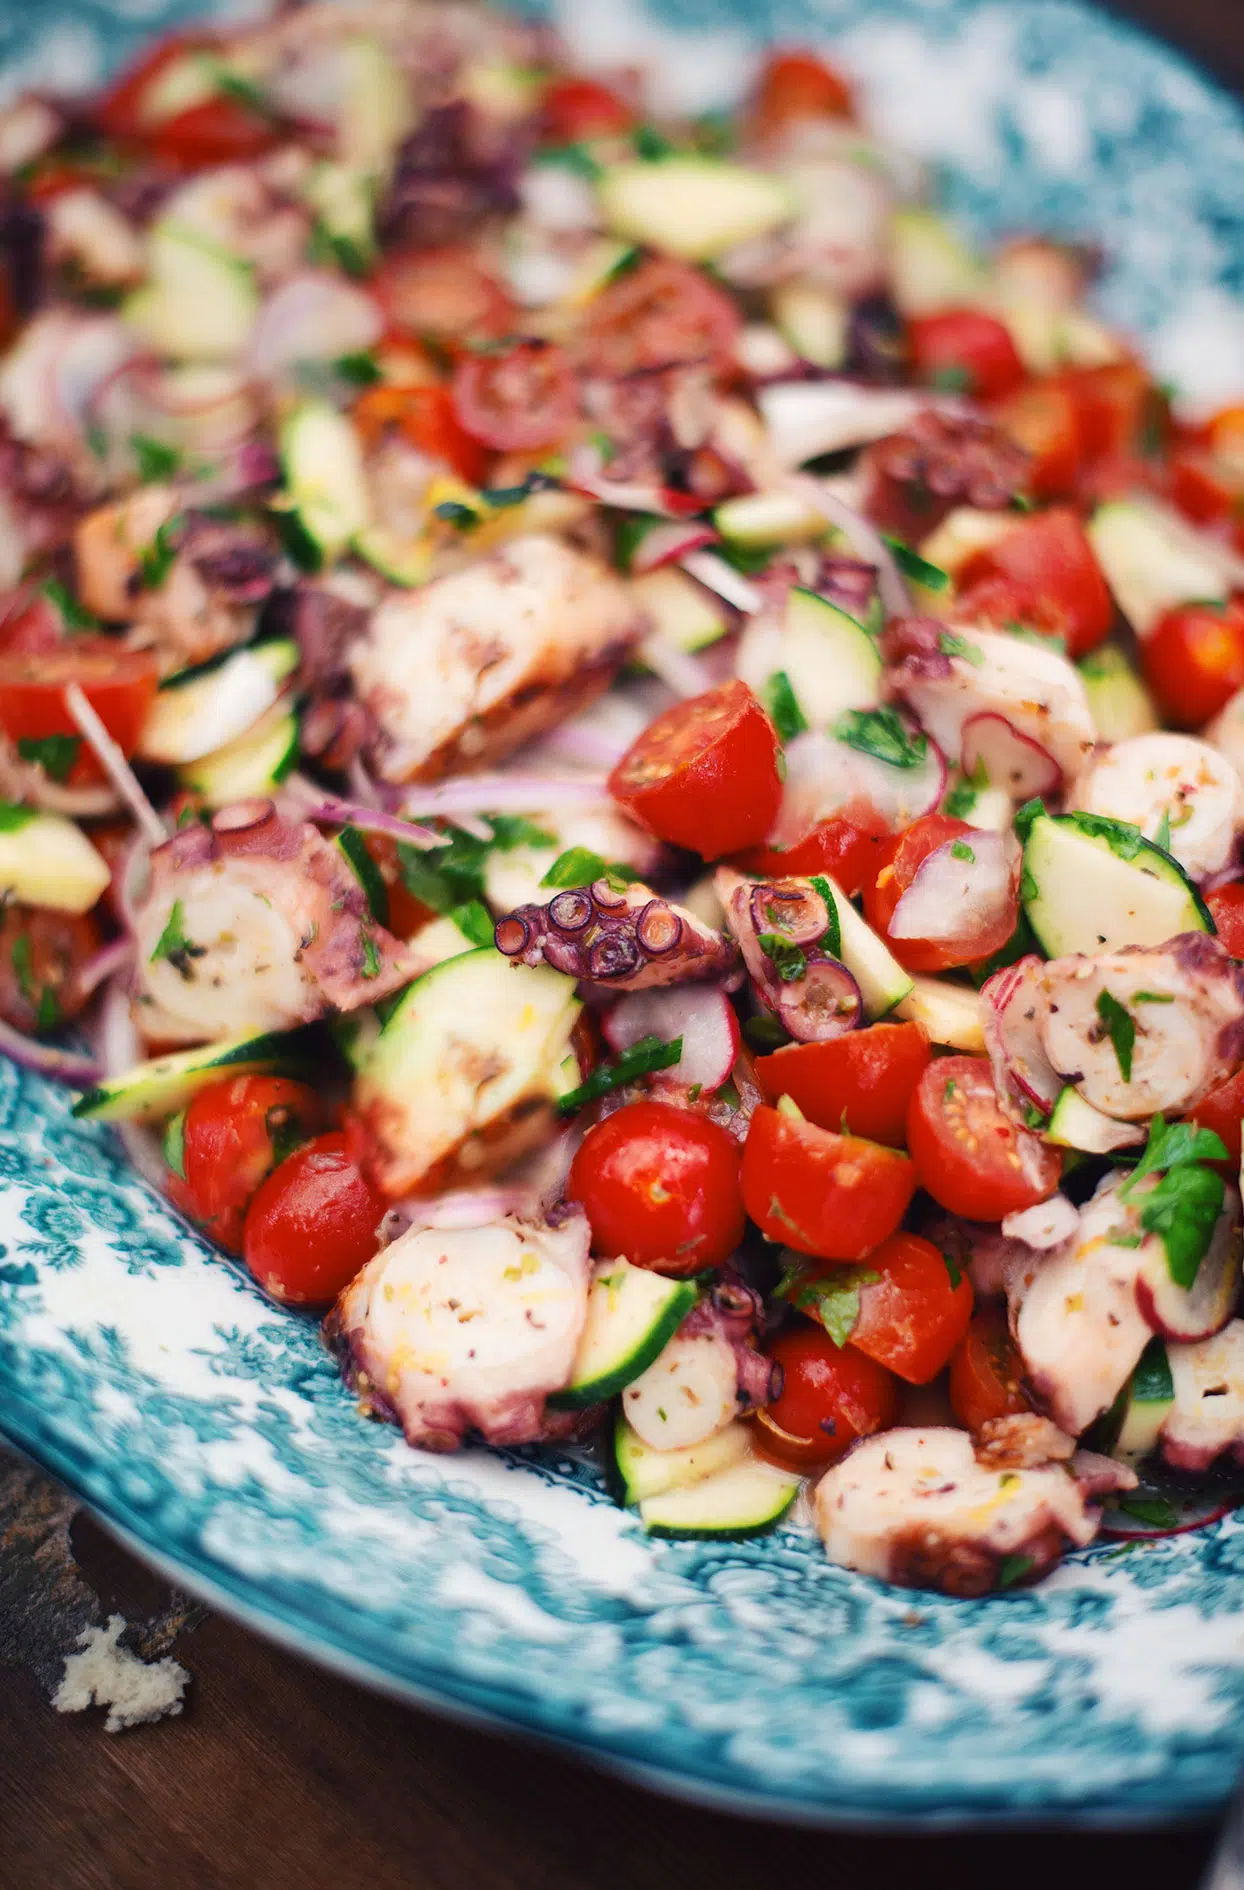 Grilled octopus salad with garden vegetables